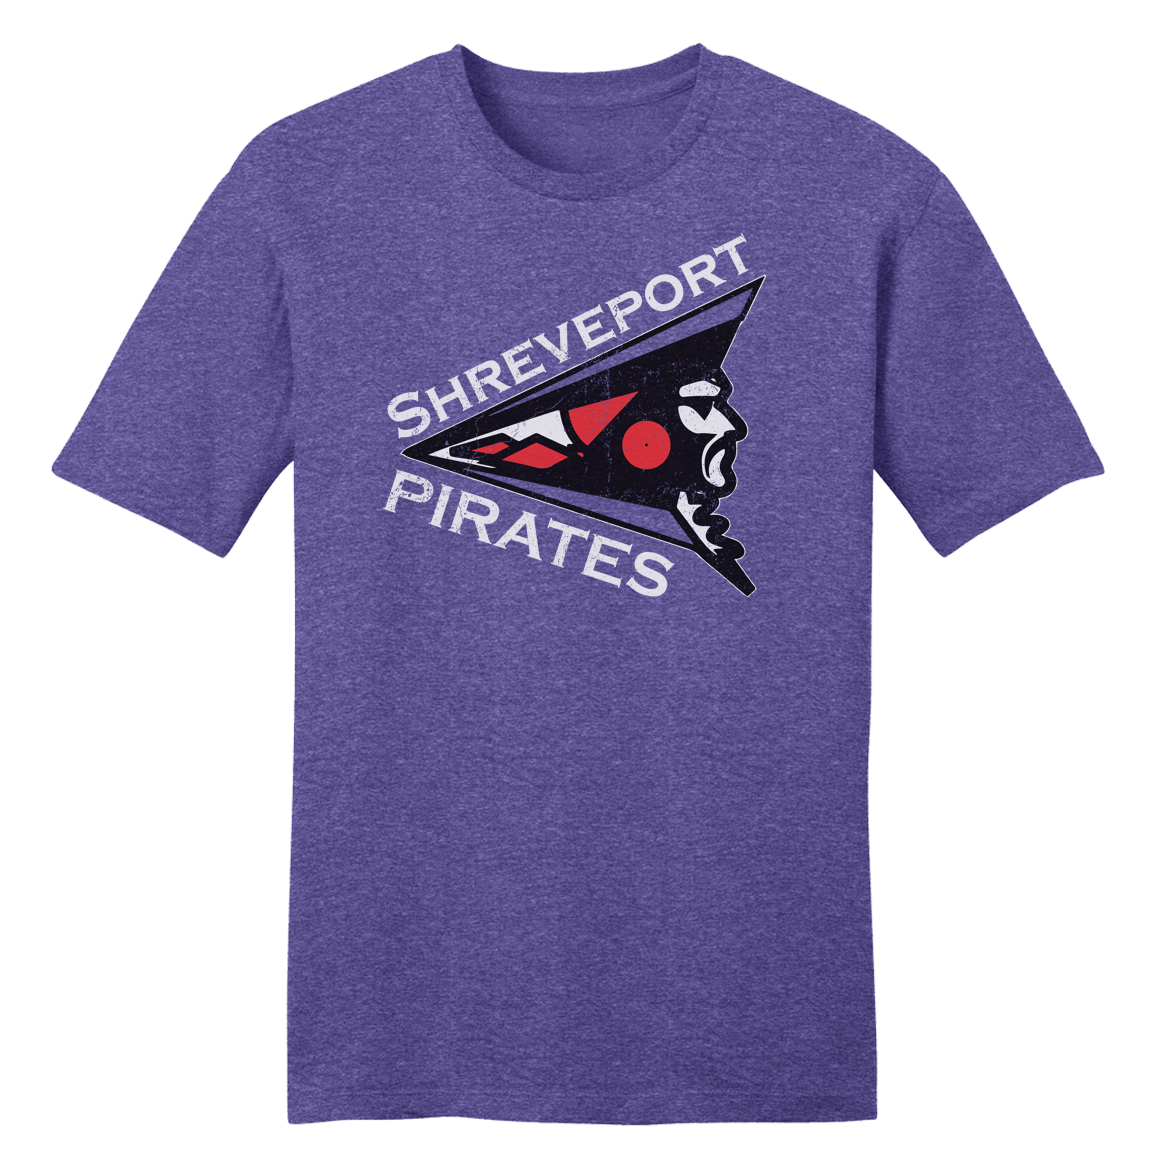 Shreveport Pirates Football Apparel Store